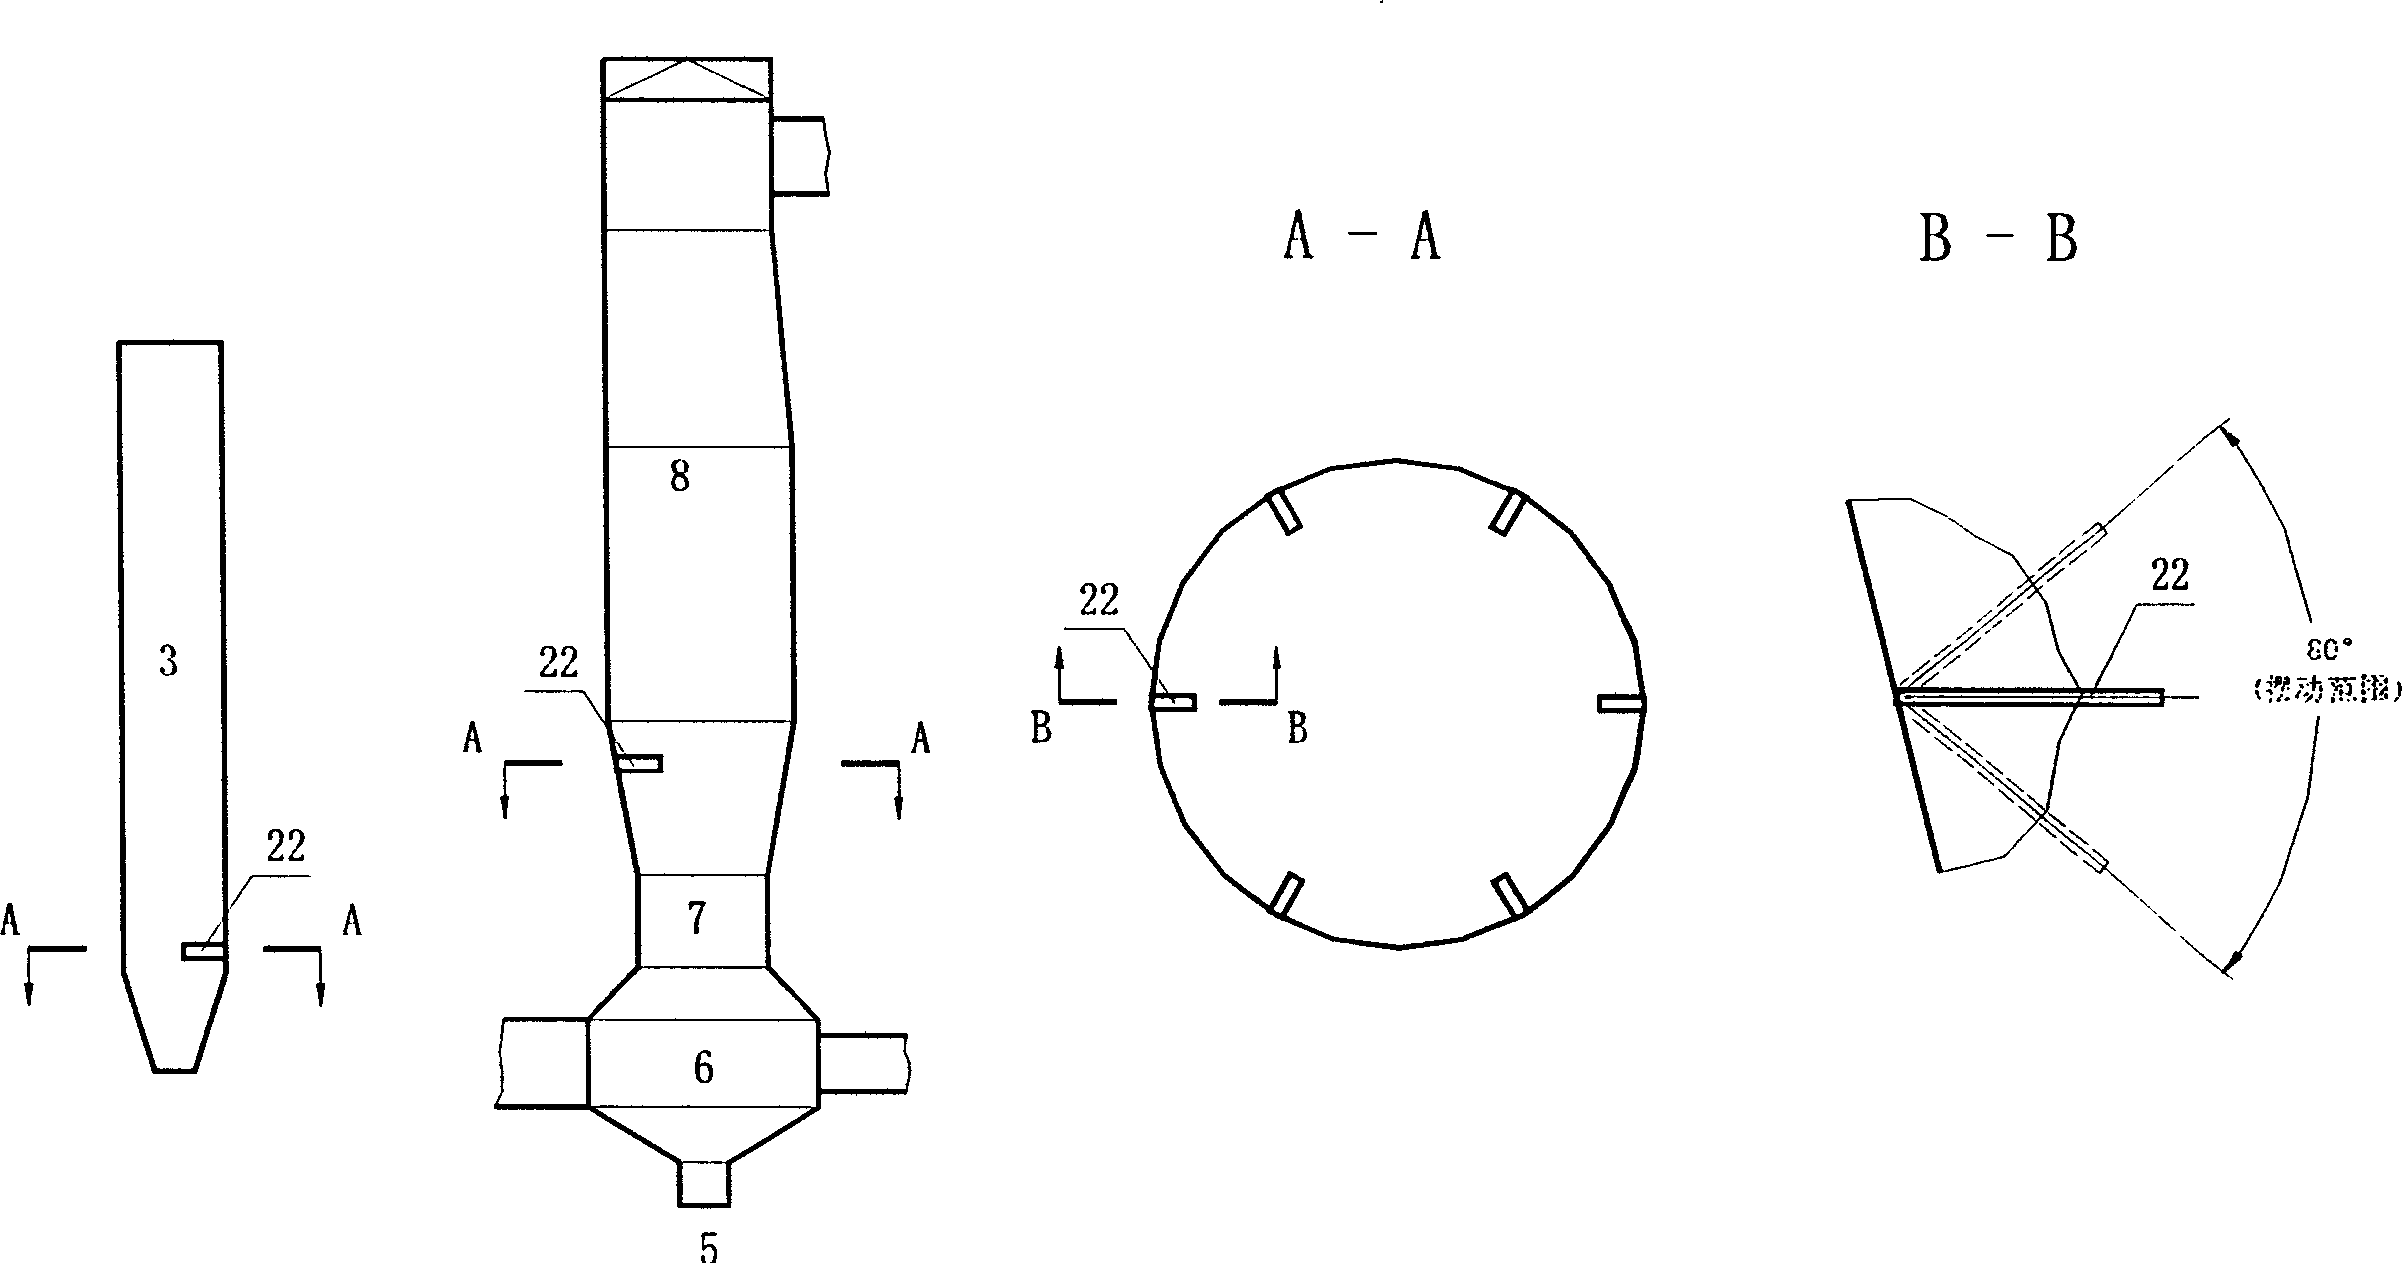 Dry-stack gas desulful-izing method using position regulatable water sprag atomization method